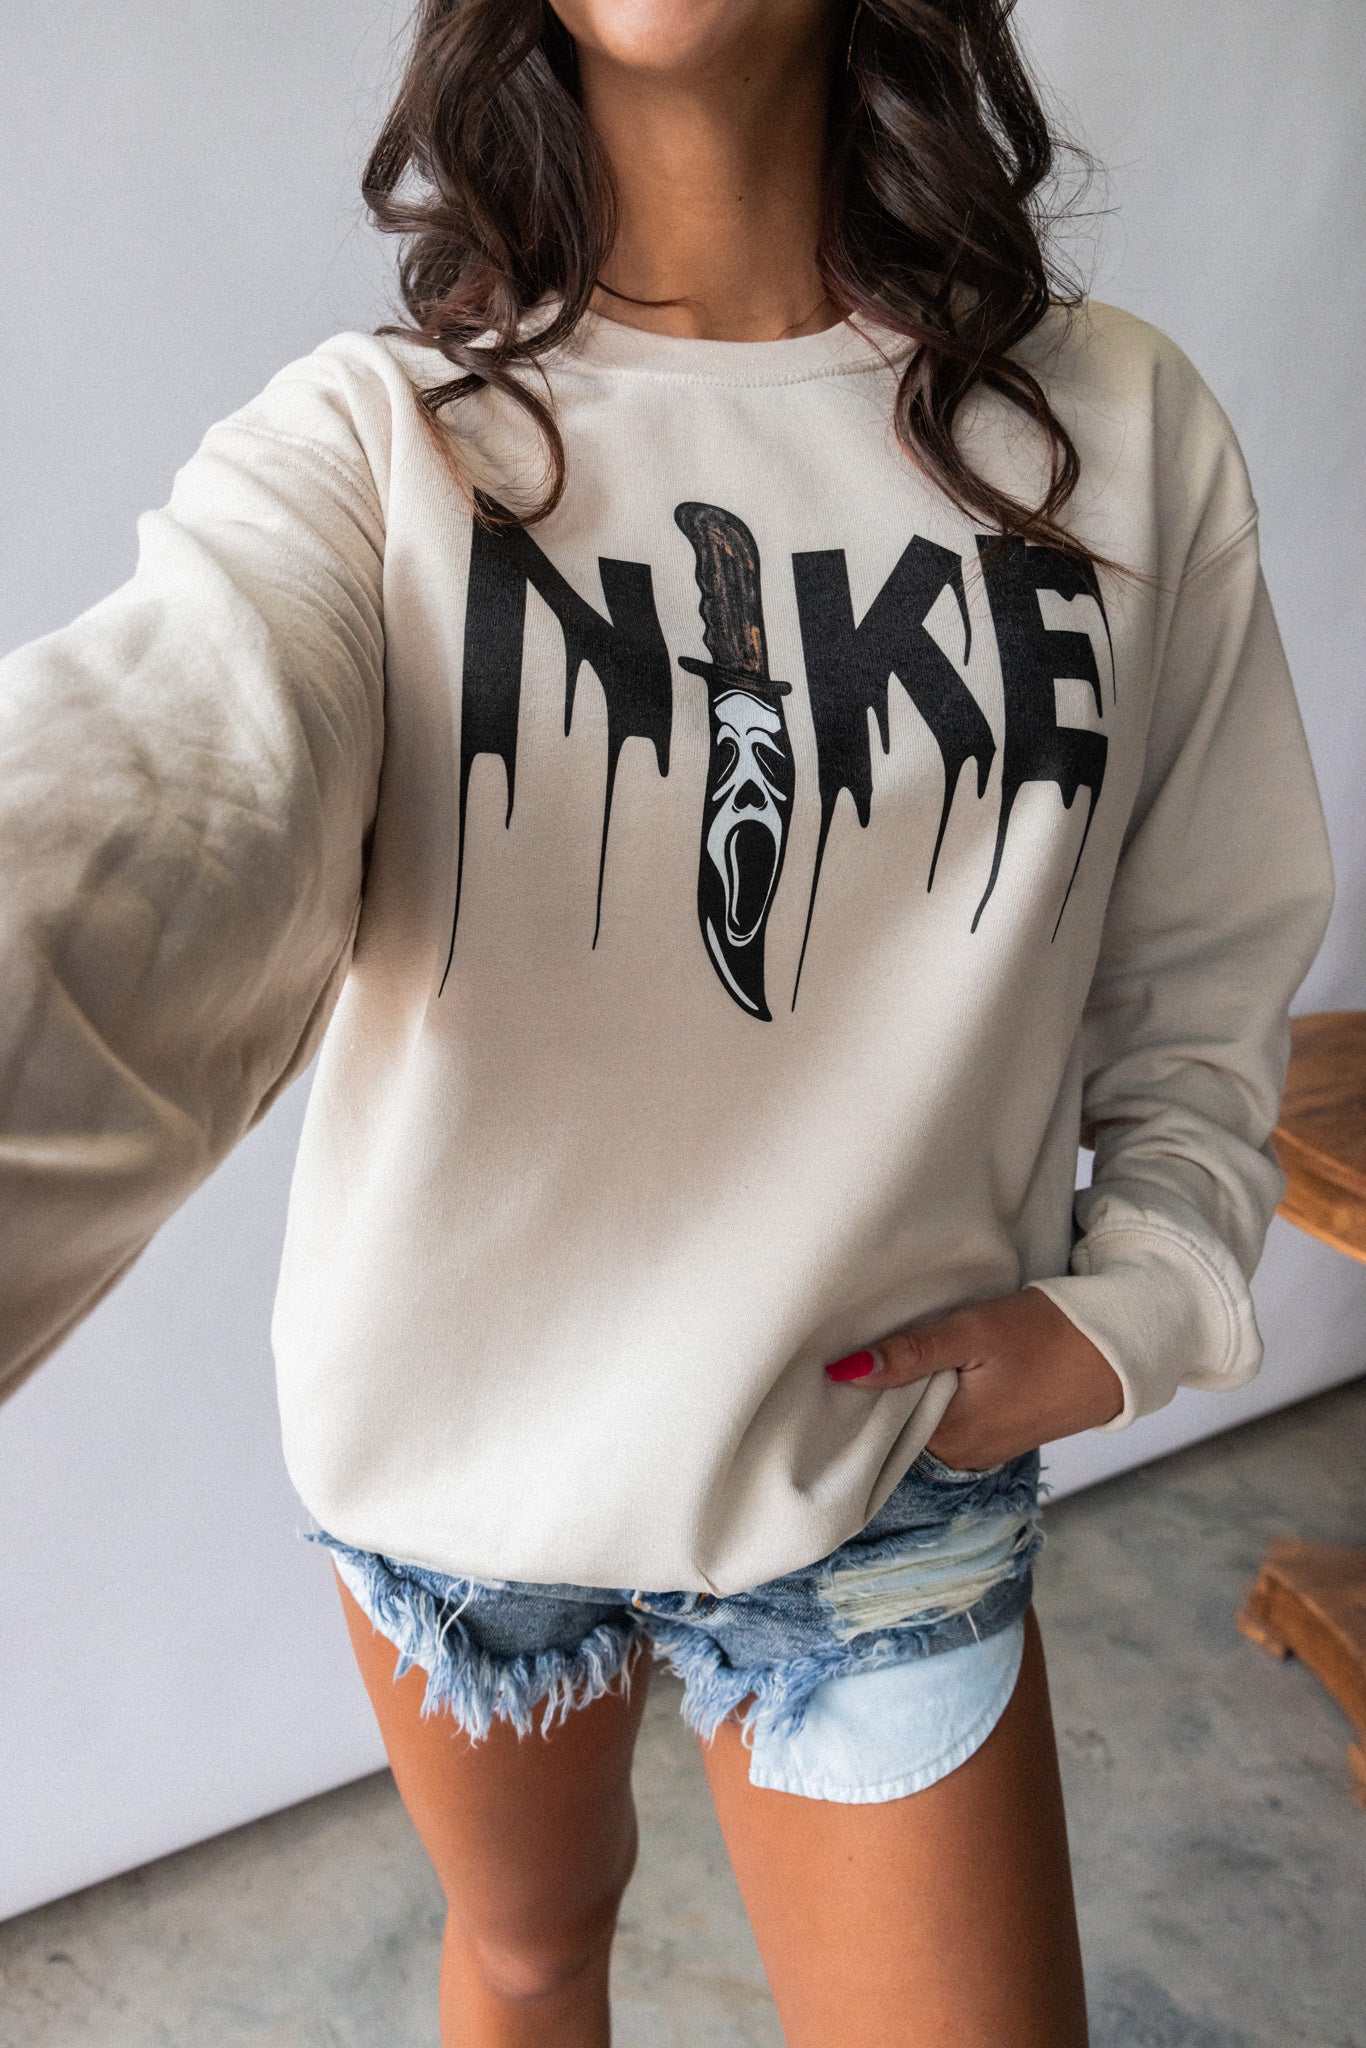 Nike Ghostface Graphic Sweater